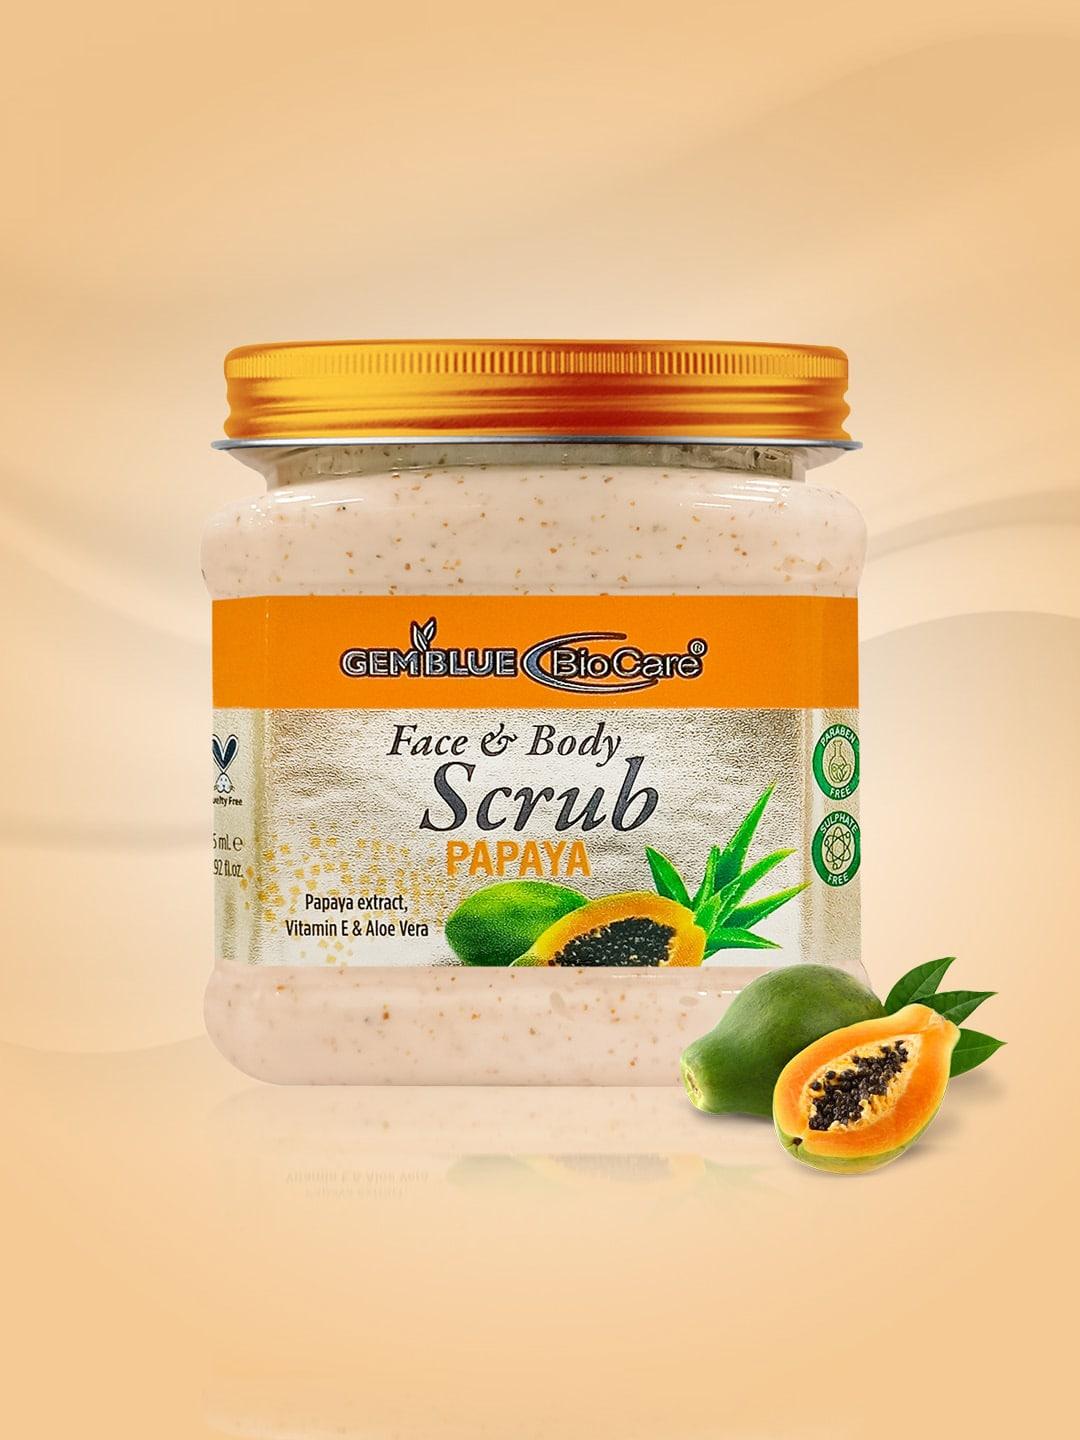 GEMBLUE BioCare Paraben Free Papaya Face & Body Scrub with Vitamin E & Aloe Vera - 385 ml